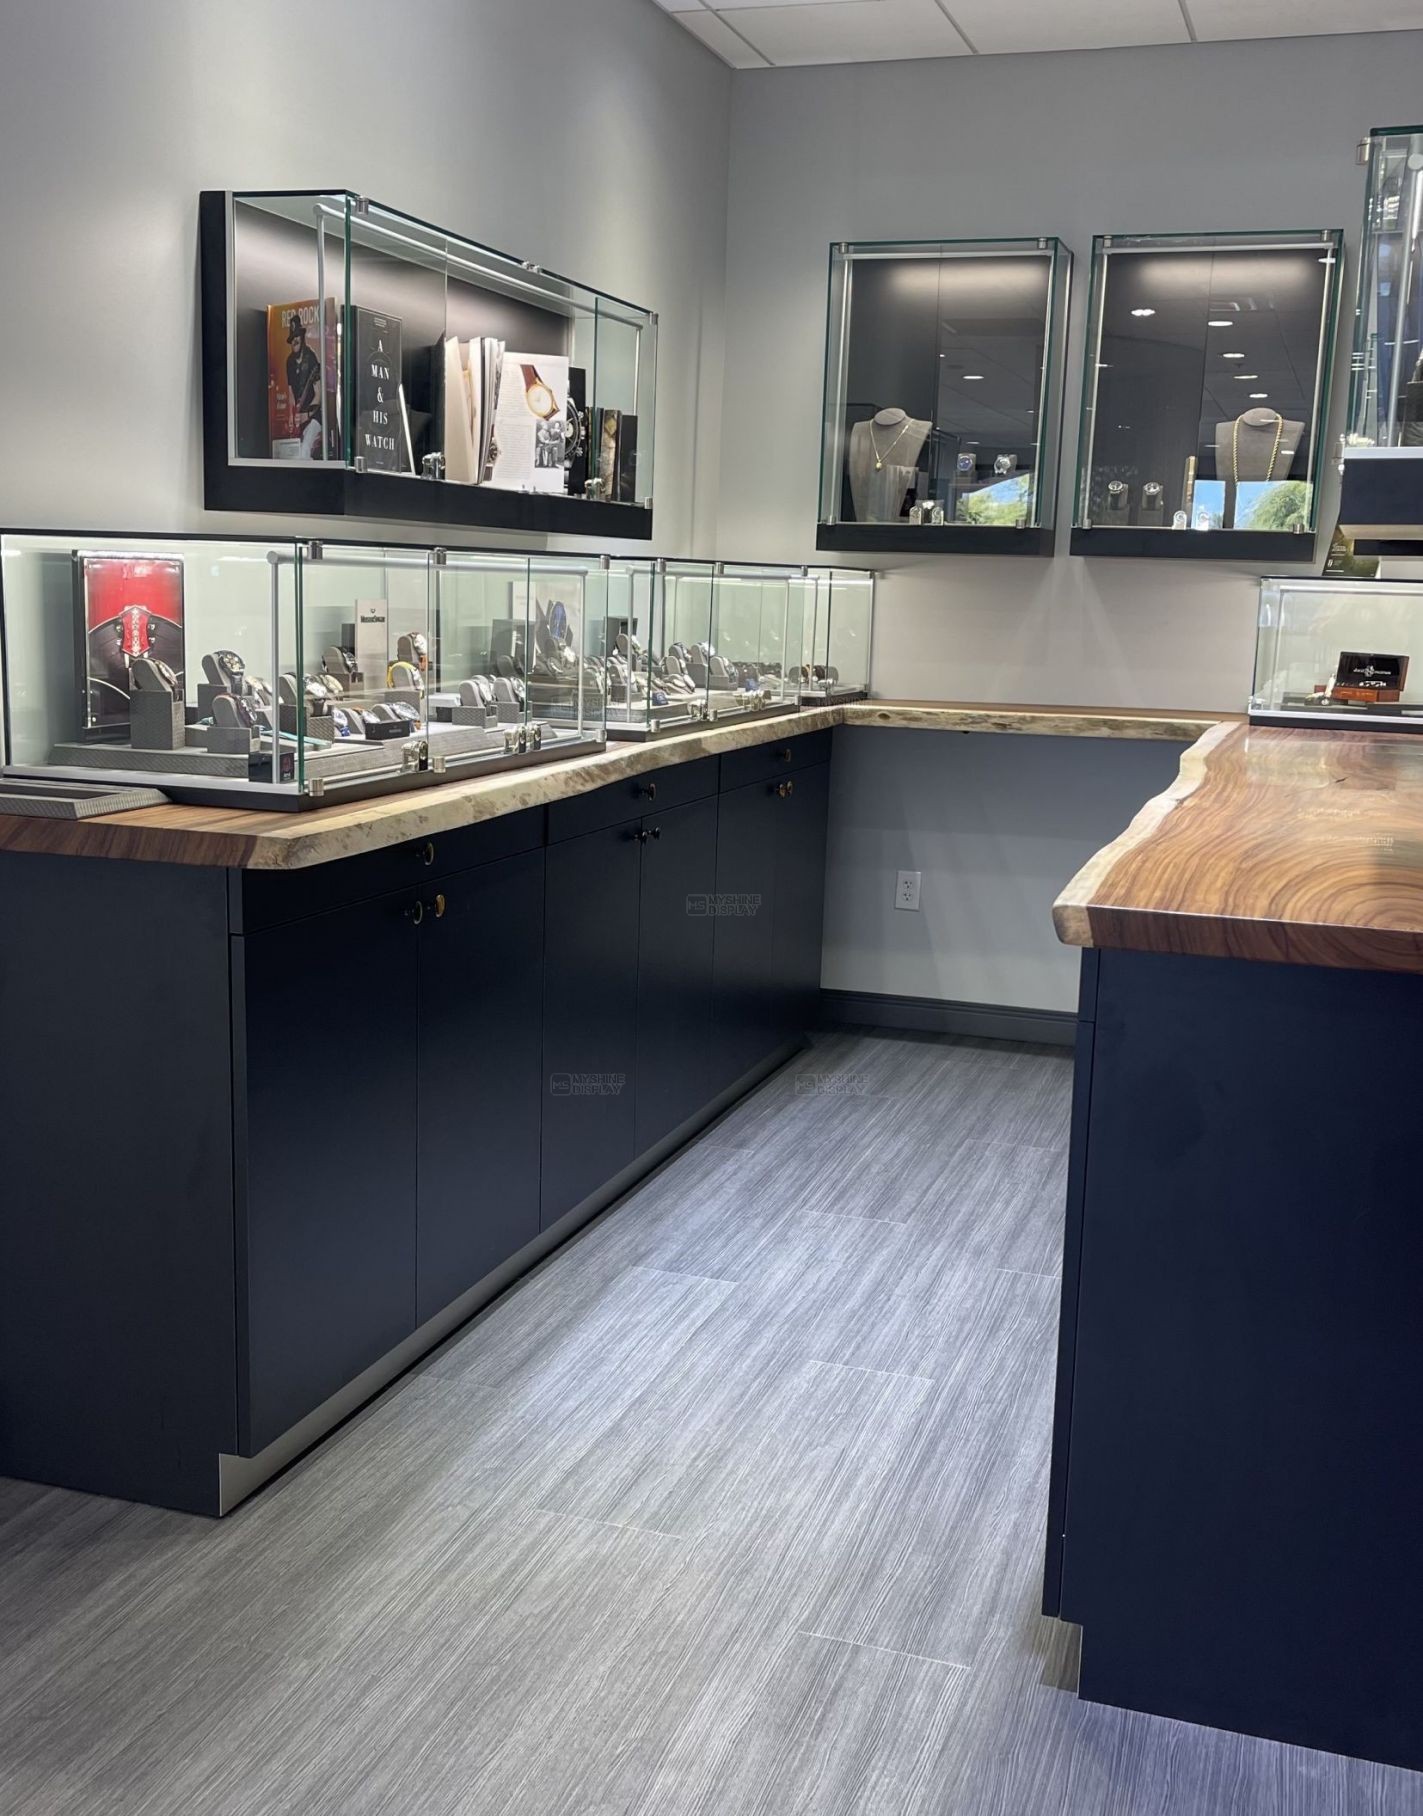 MS wooden Jewellery Shop Interior Design 114